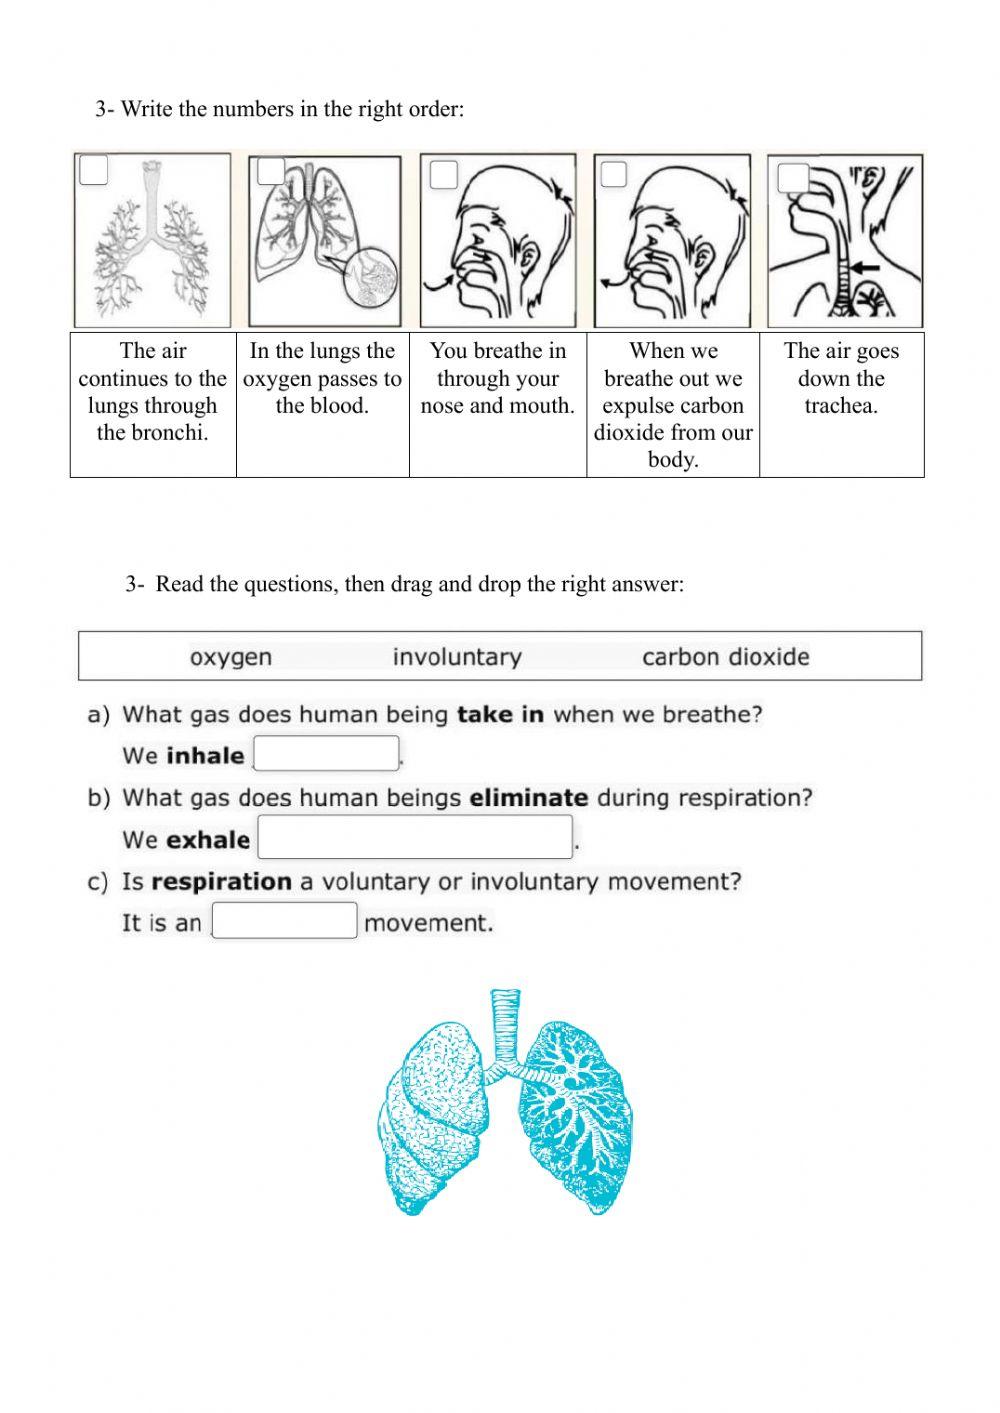 Circulatory and respiratory systems